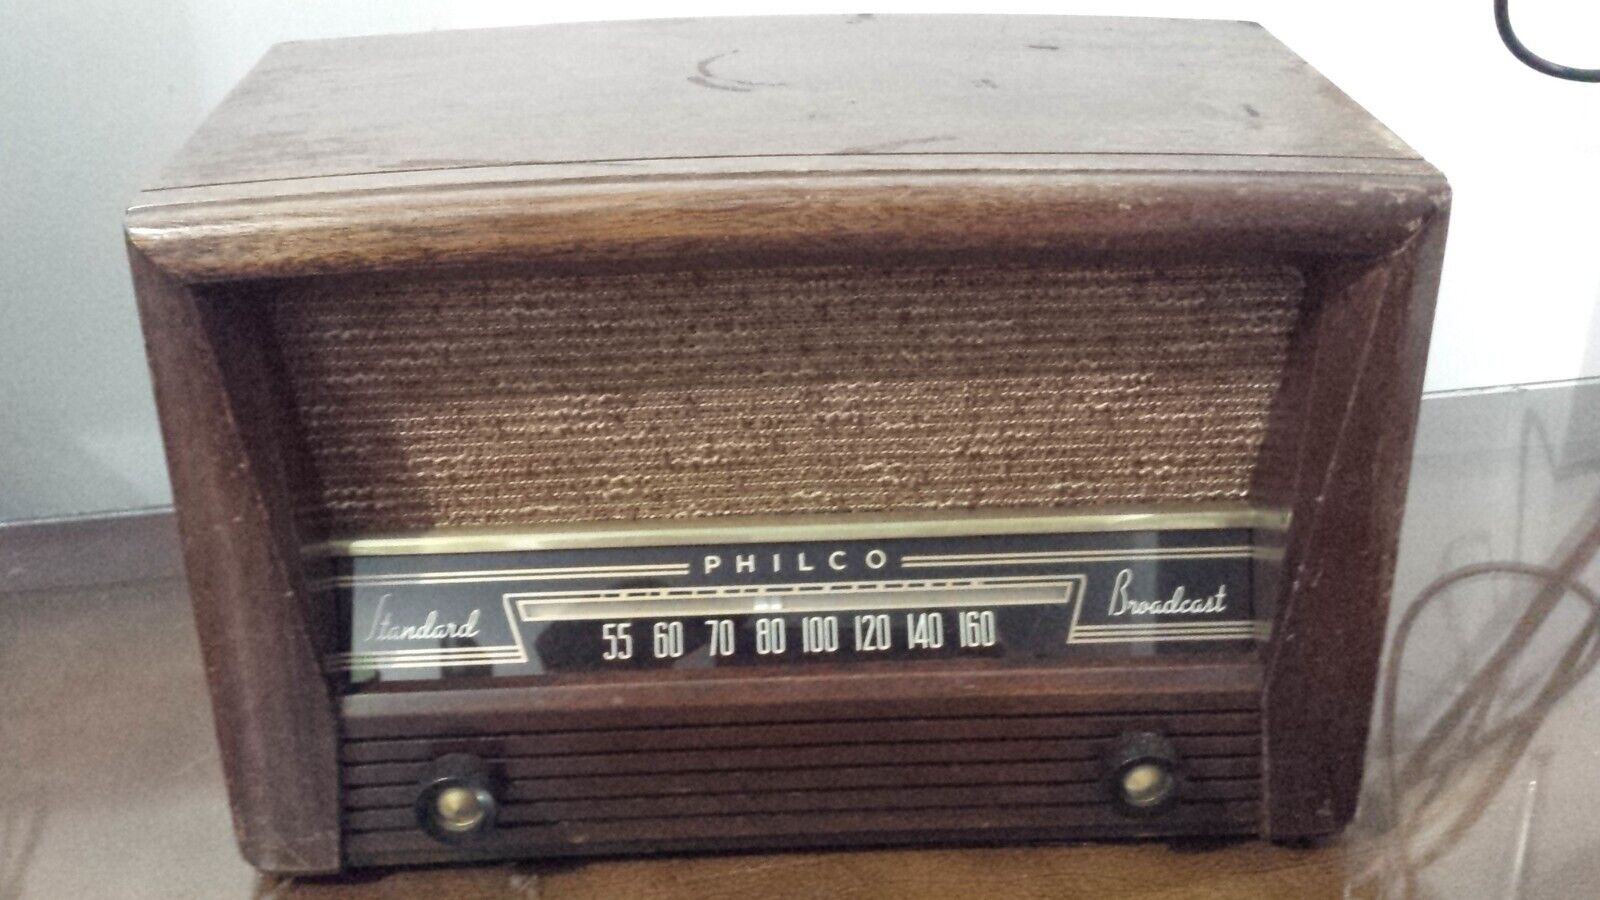 PHILCO 50-524 AM WOOD TABLE RADIO NICE RESTORED ELECTRONICS AM - See YOUTUBE